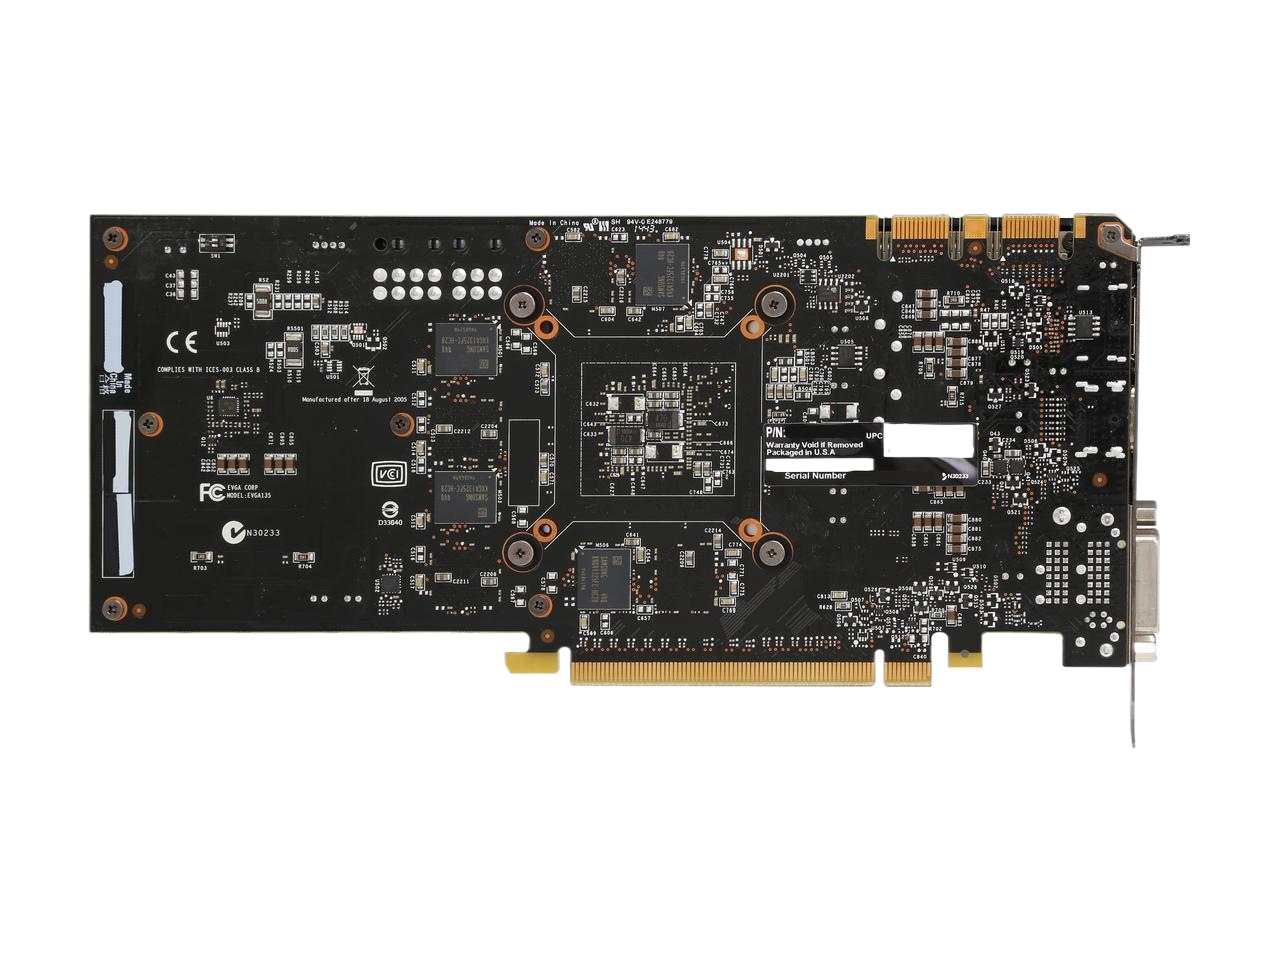 EVGA GeForce GTX 970 4GB DirectX 12 256-Bit GDDR5 PCI Express 3.0 SLI Support ACX 2.0 Video Graphics Card 04G-P4-2976-KR